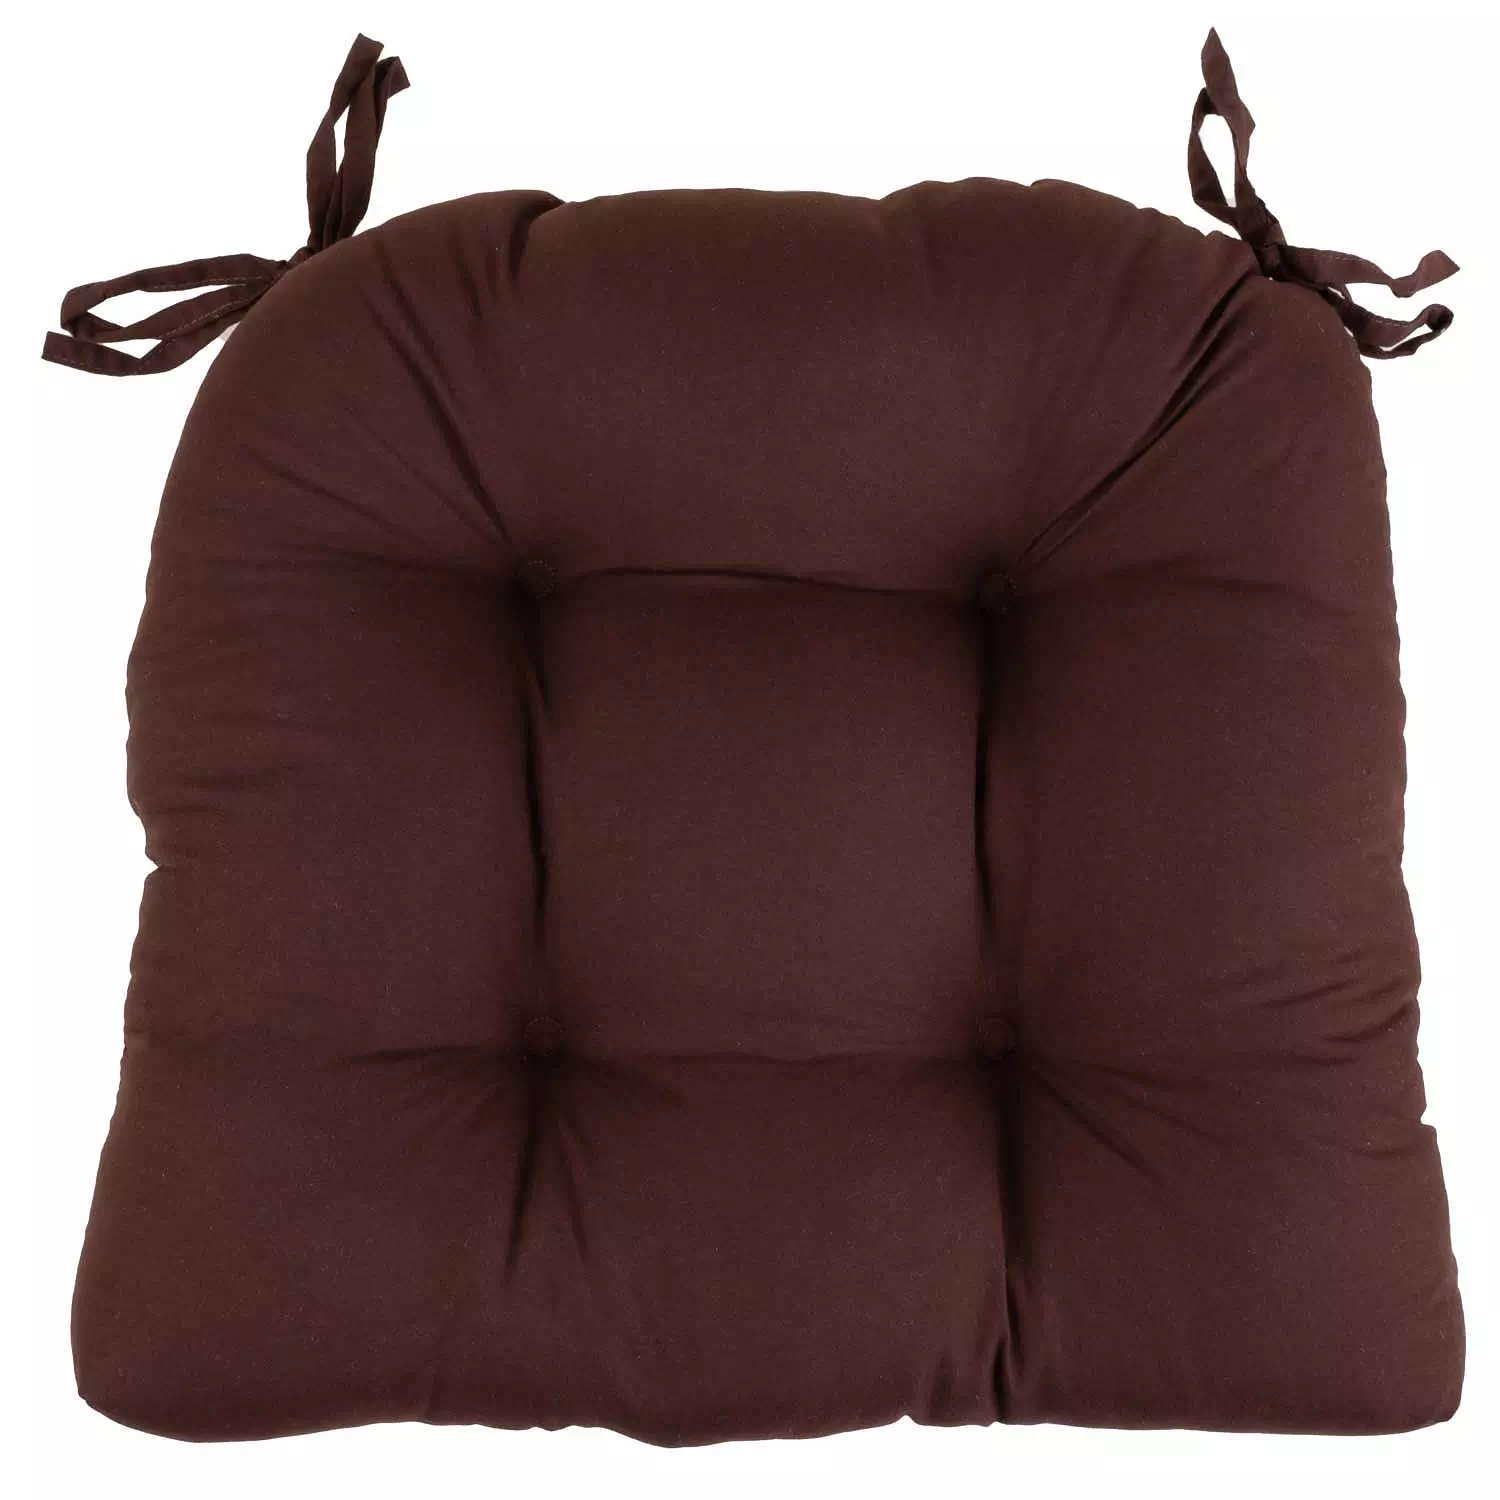 Microfiber chair pad, 15"x15", brown